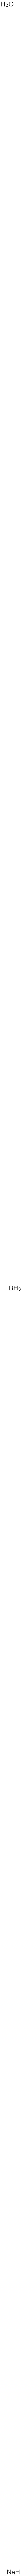 Boron sodium oxide (B3NaO5) Structure